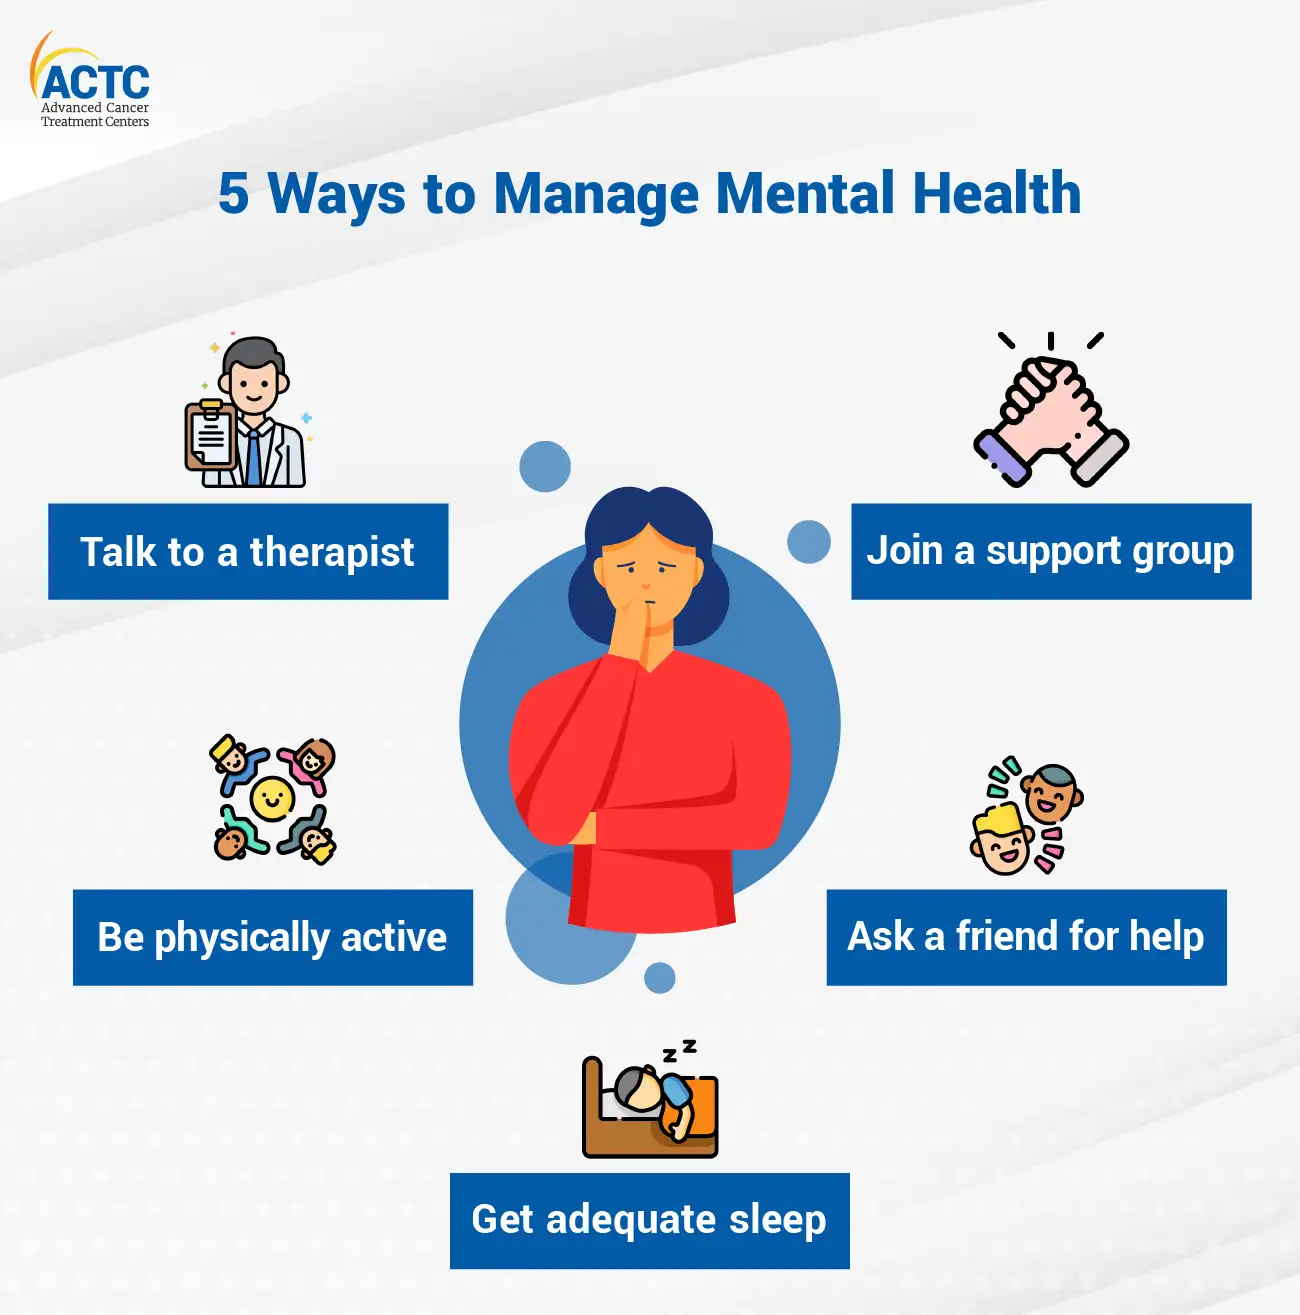 6 tips for managing mental health: